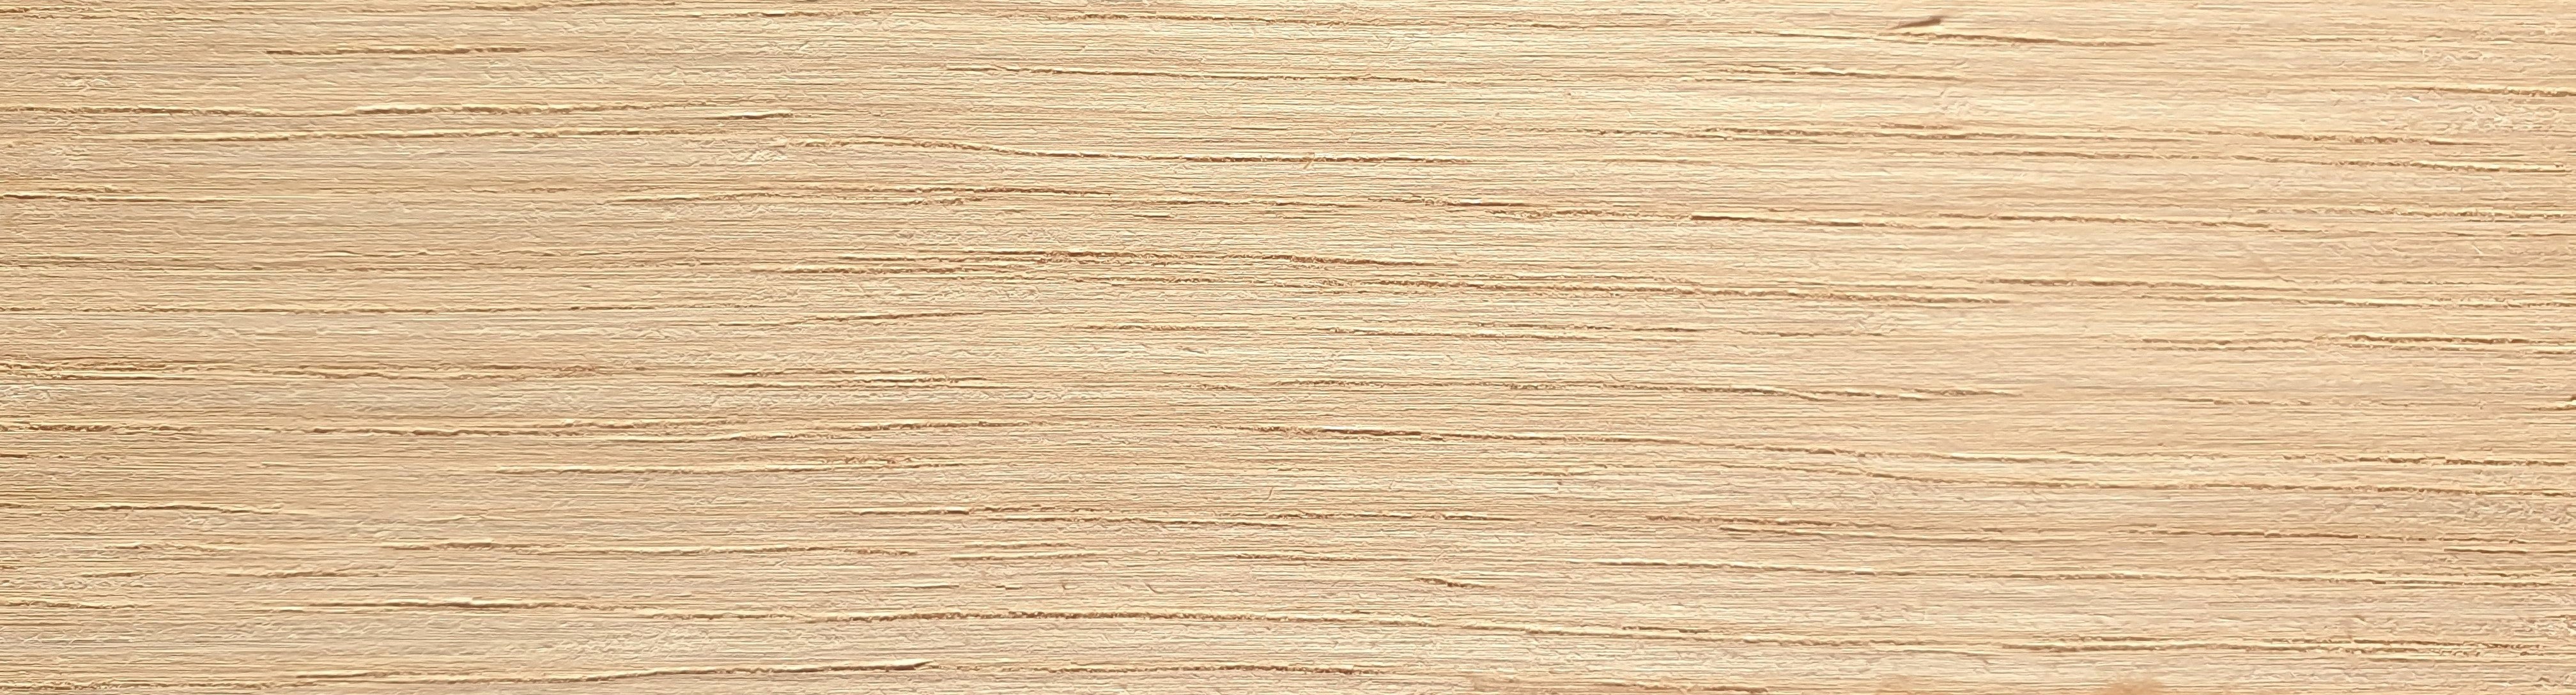 American White Oak Unglued Edging / Lipping 50mm x 2mm Thick Oak Wood Edging x 50 Metres